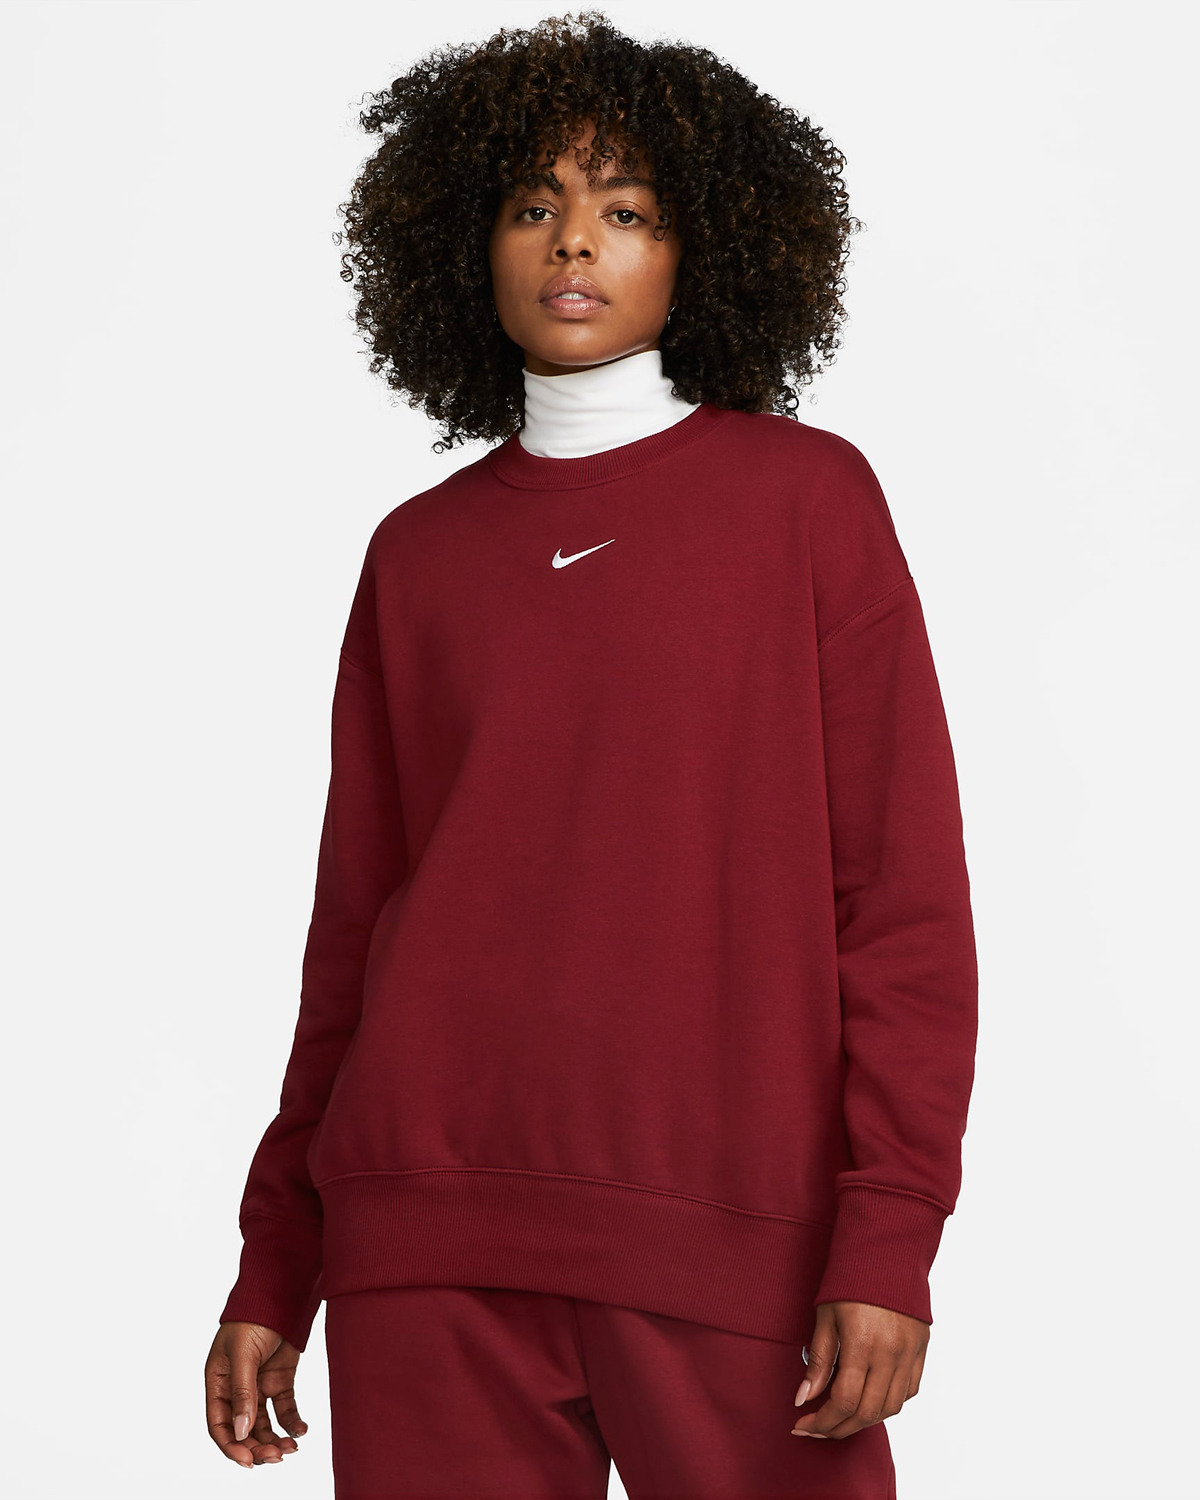 Nike-Sportswear-Womens-Phoenix-Crewneck-Sweatshirt-Team-Red